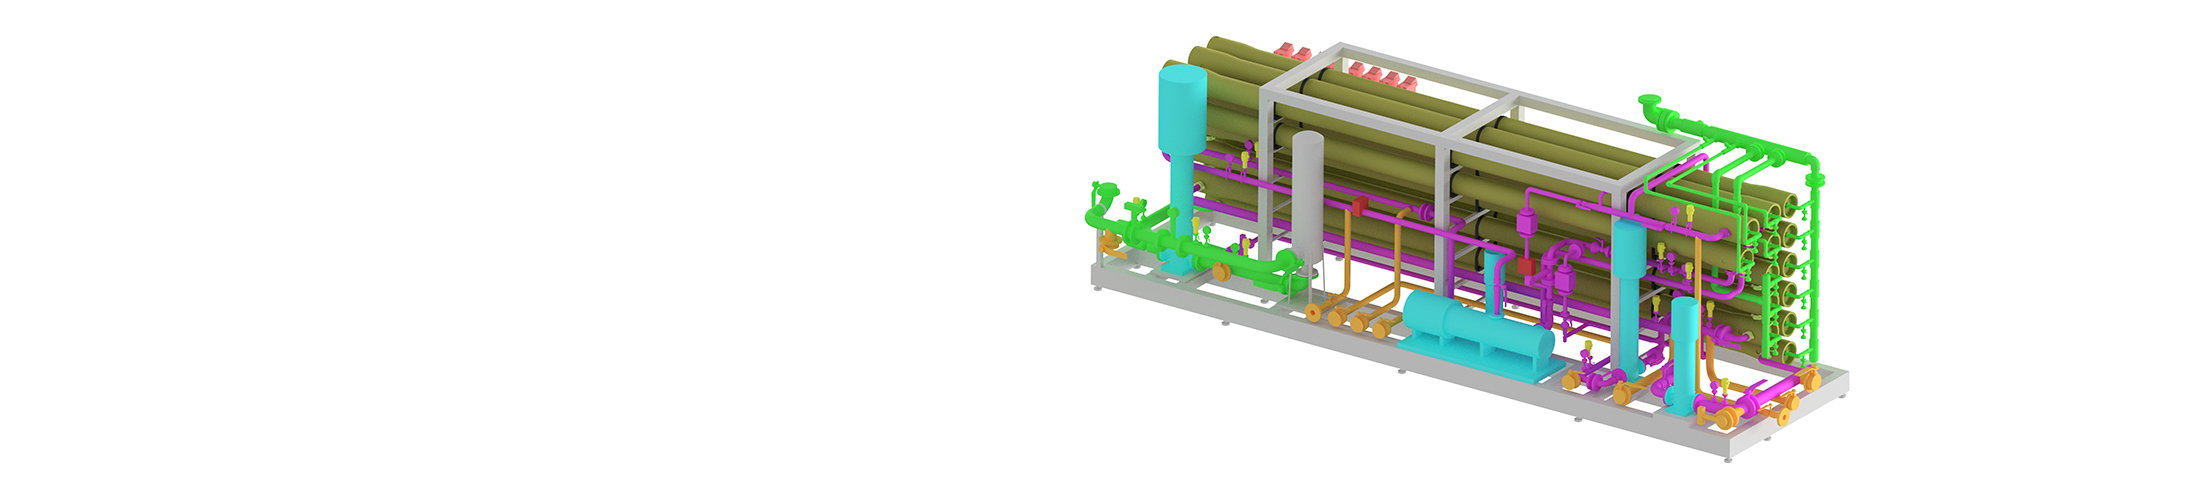 pincerato-engineering-slide-skid-osmosi-01